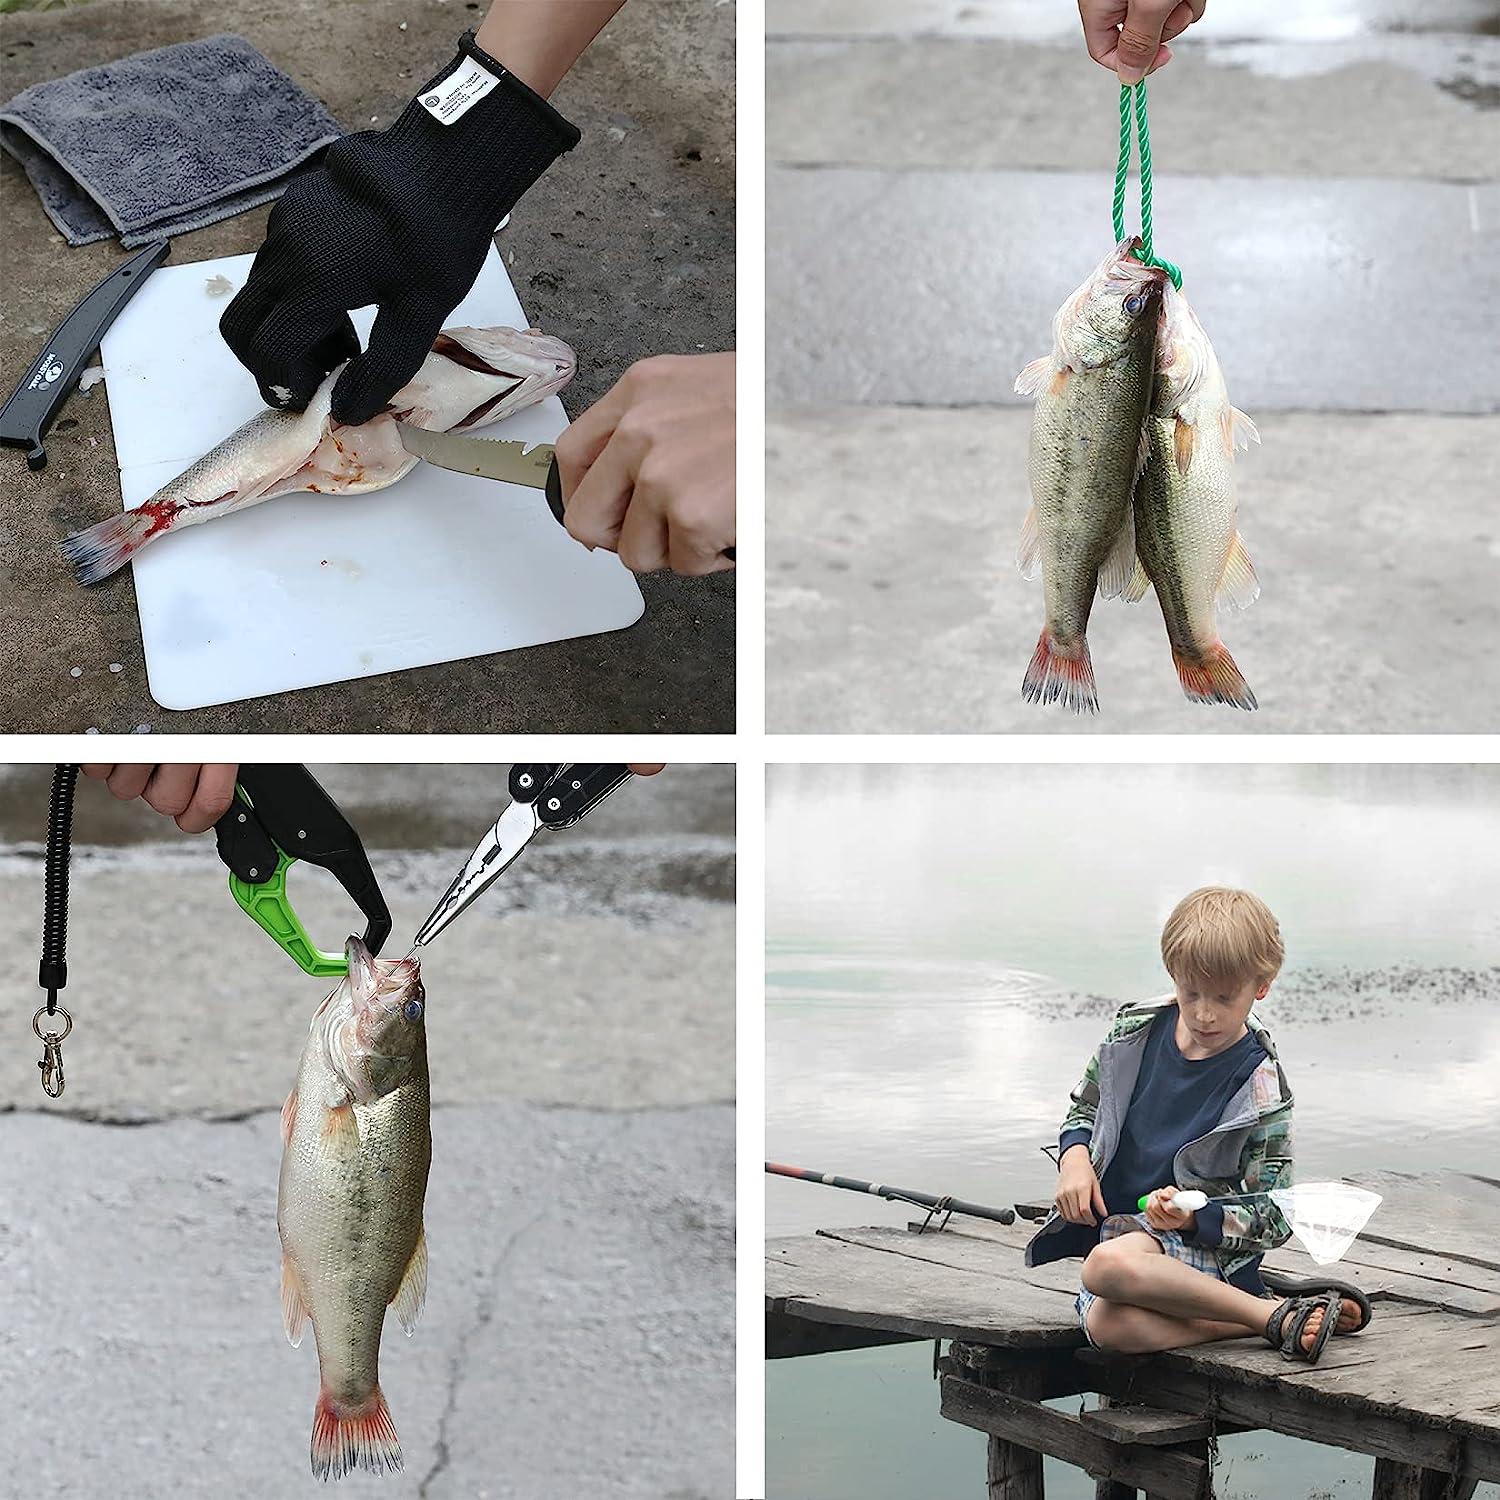 MOSSY OAK 4pc Fishing Tool Kit - Pistol Grip Fishing Pliers, Fish